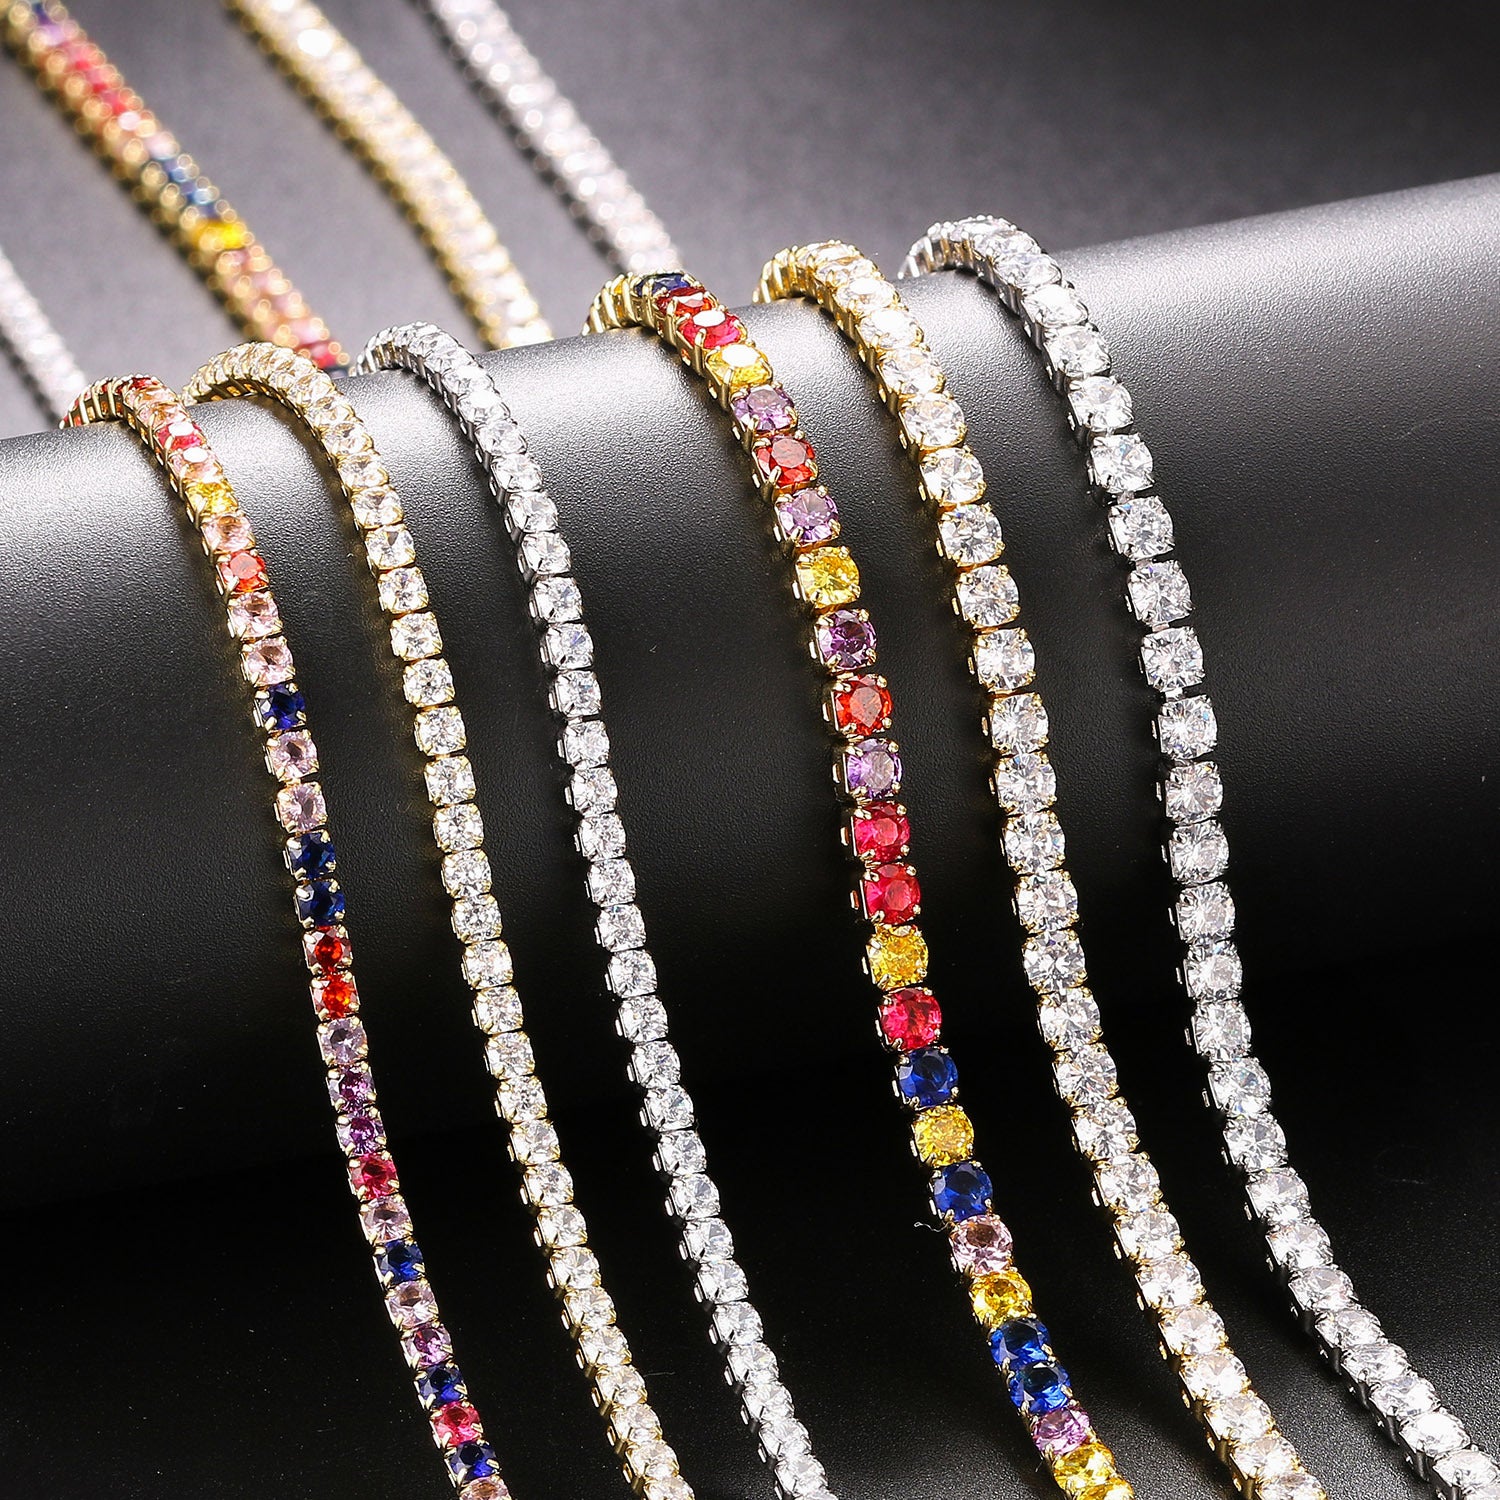 5pcs/lot 14/16/18inch Gold & Silver Tennis Chain Necklaces Chain Necklaces Charms Beads Beyond